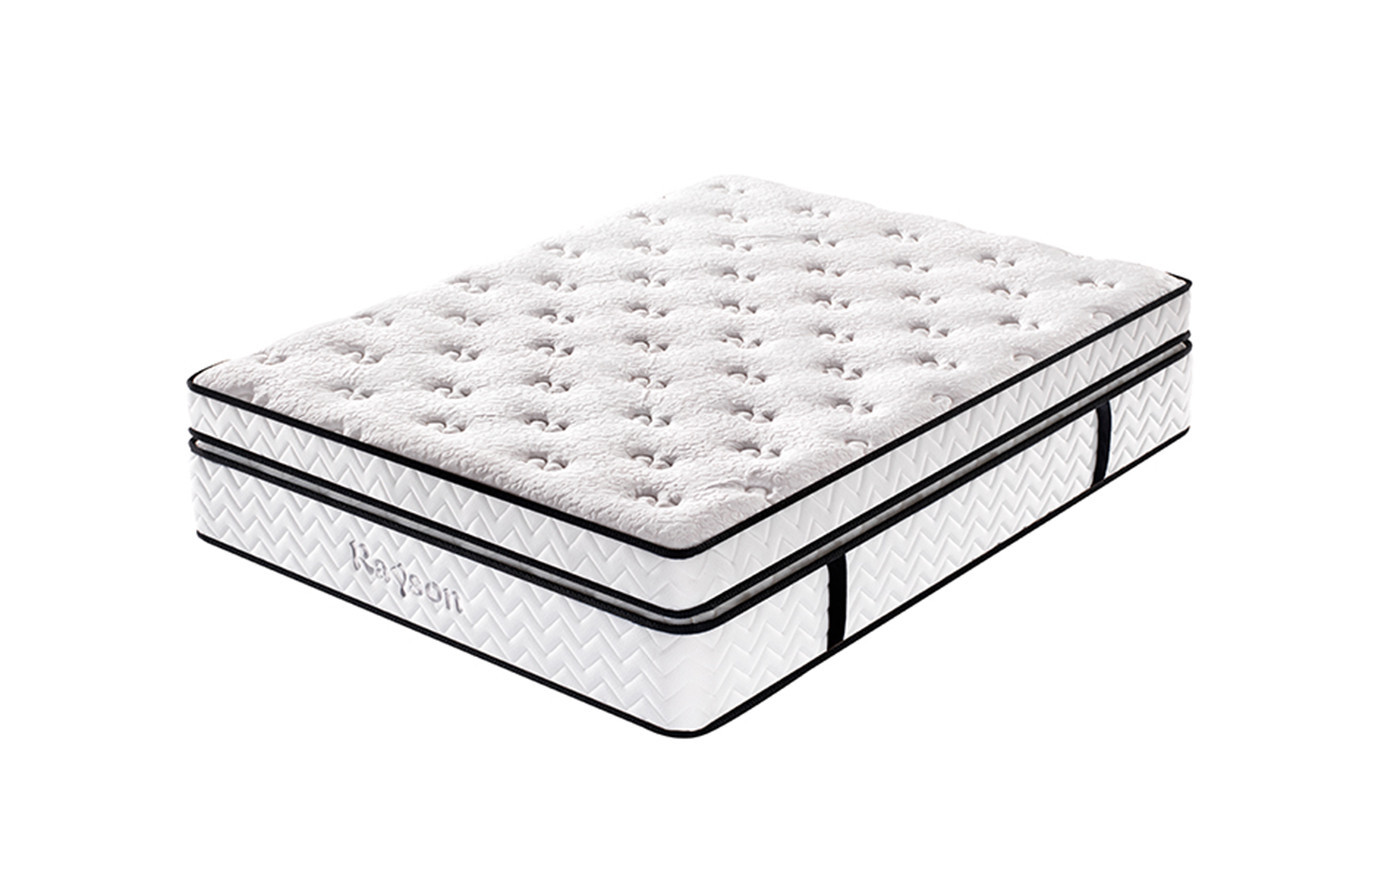 spring mattress hotel series mattress 36cm height for sleep Synwin